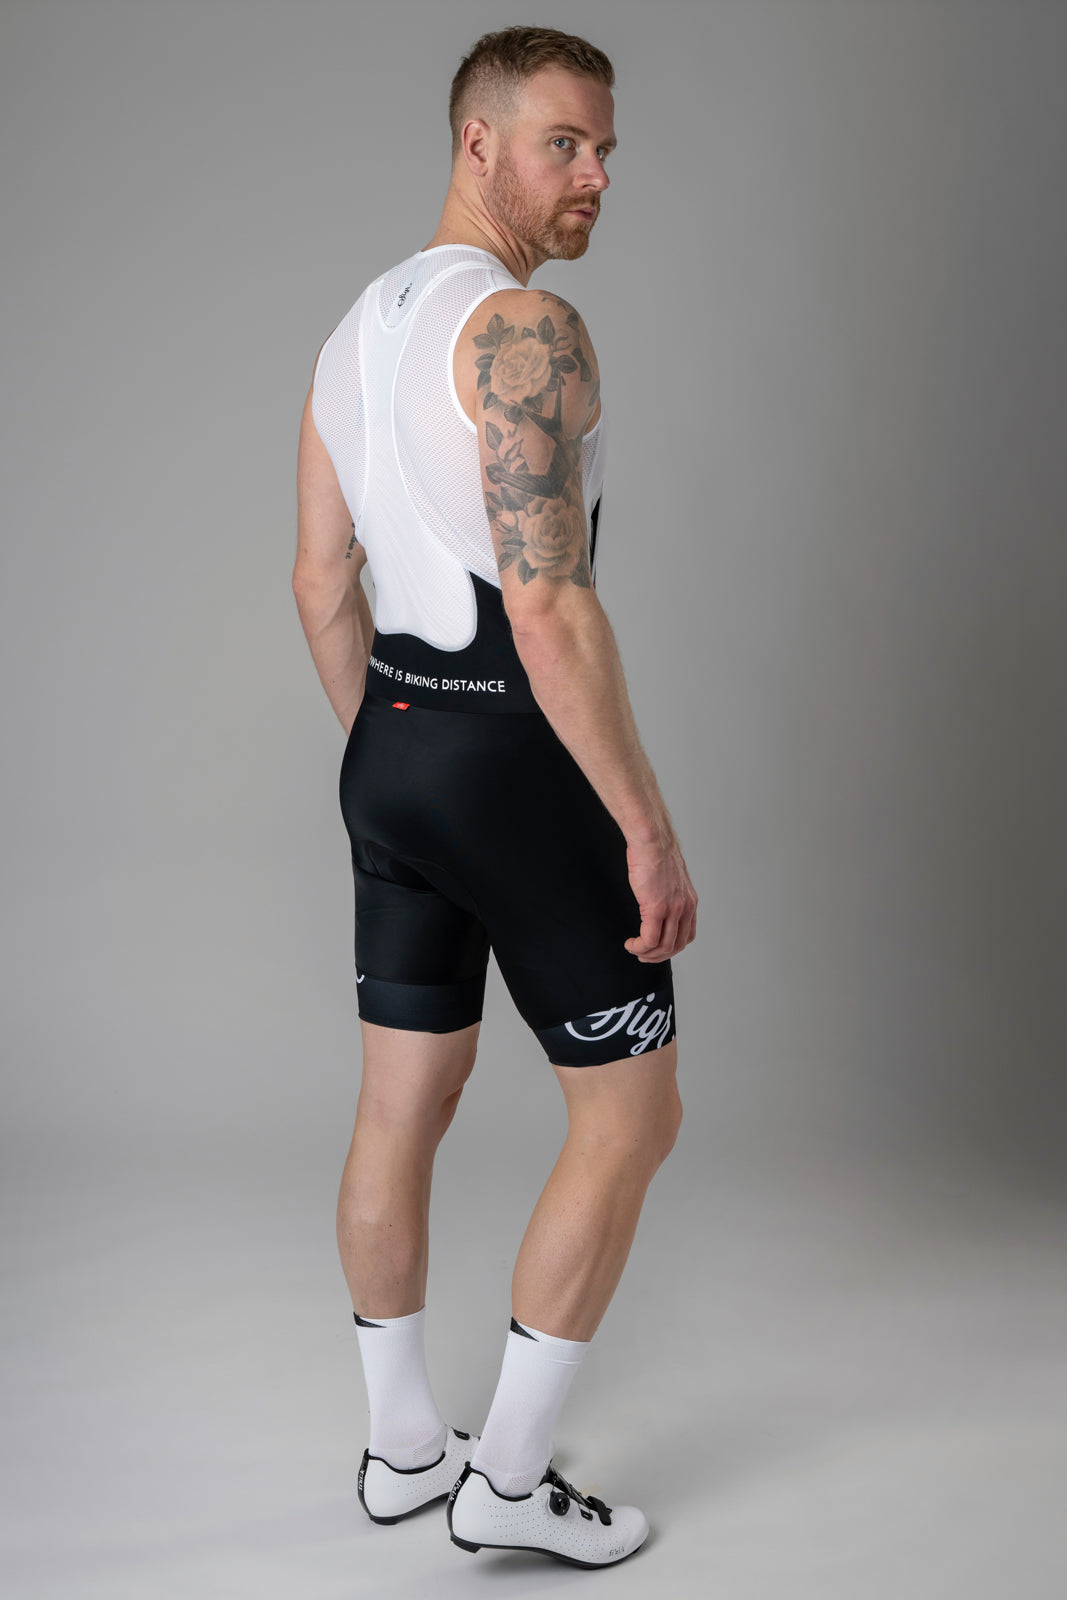 Sigr Landsväg - longer on your leg - Cycling Bib Shorts for Men